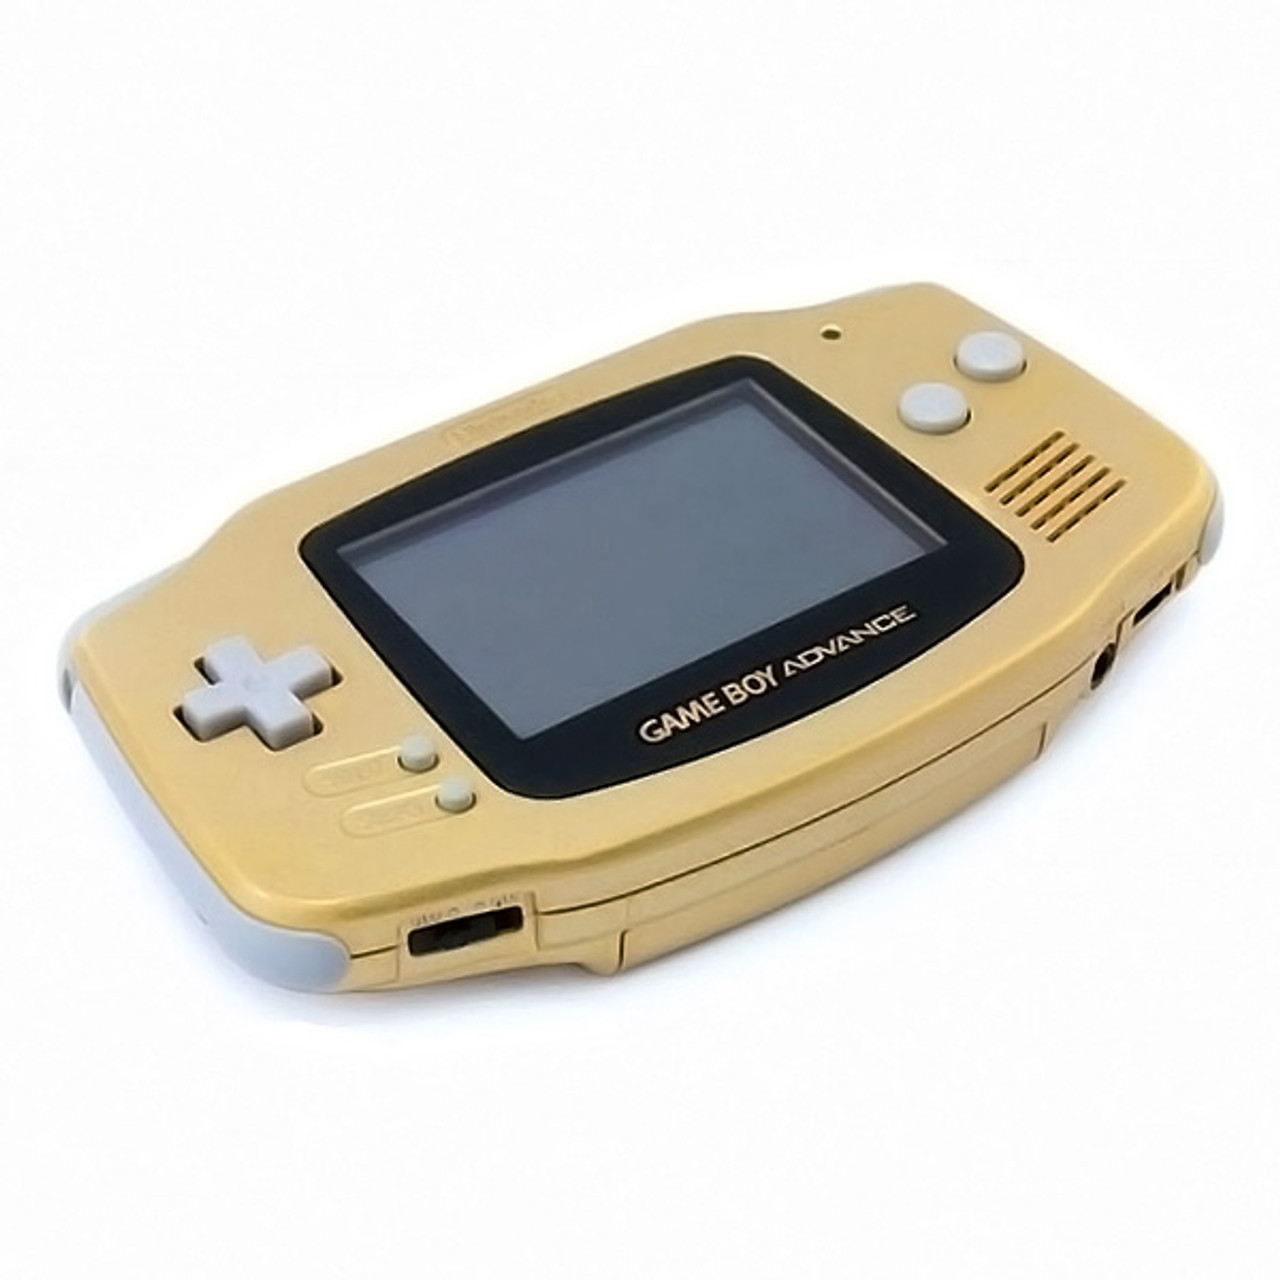 GameBoy Advance System Gold - Import